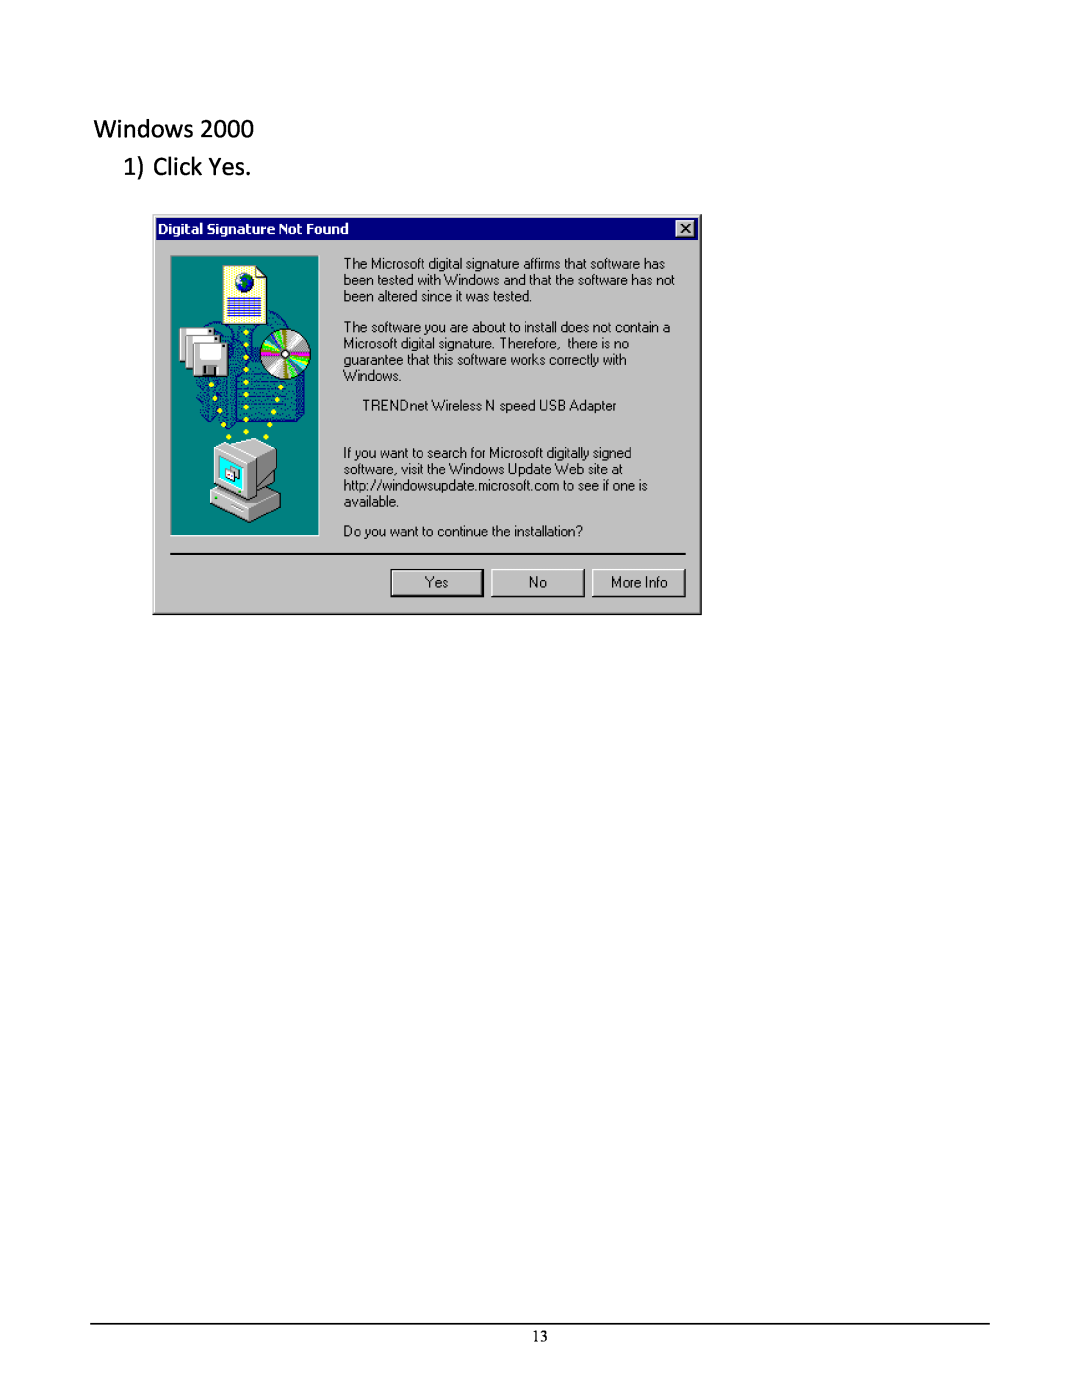 TRENDnet TEW-649UB manual Windows 1 Click Yes 